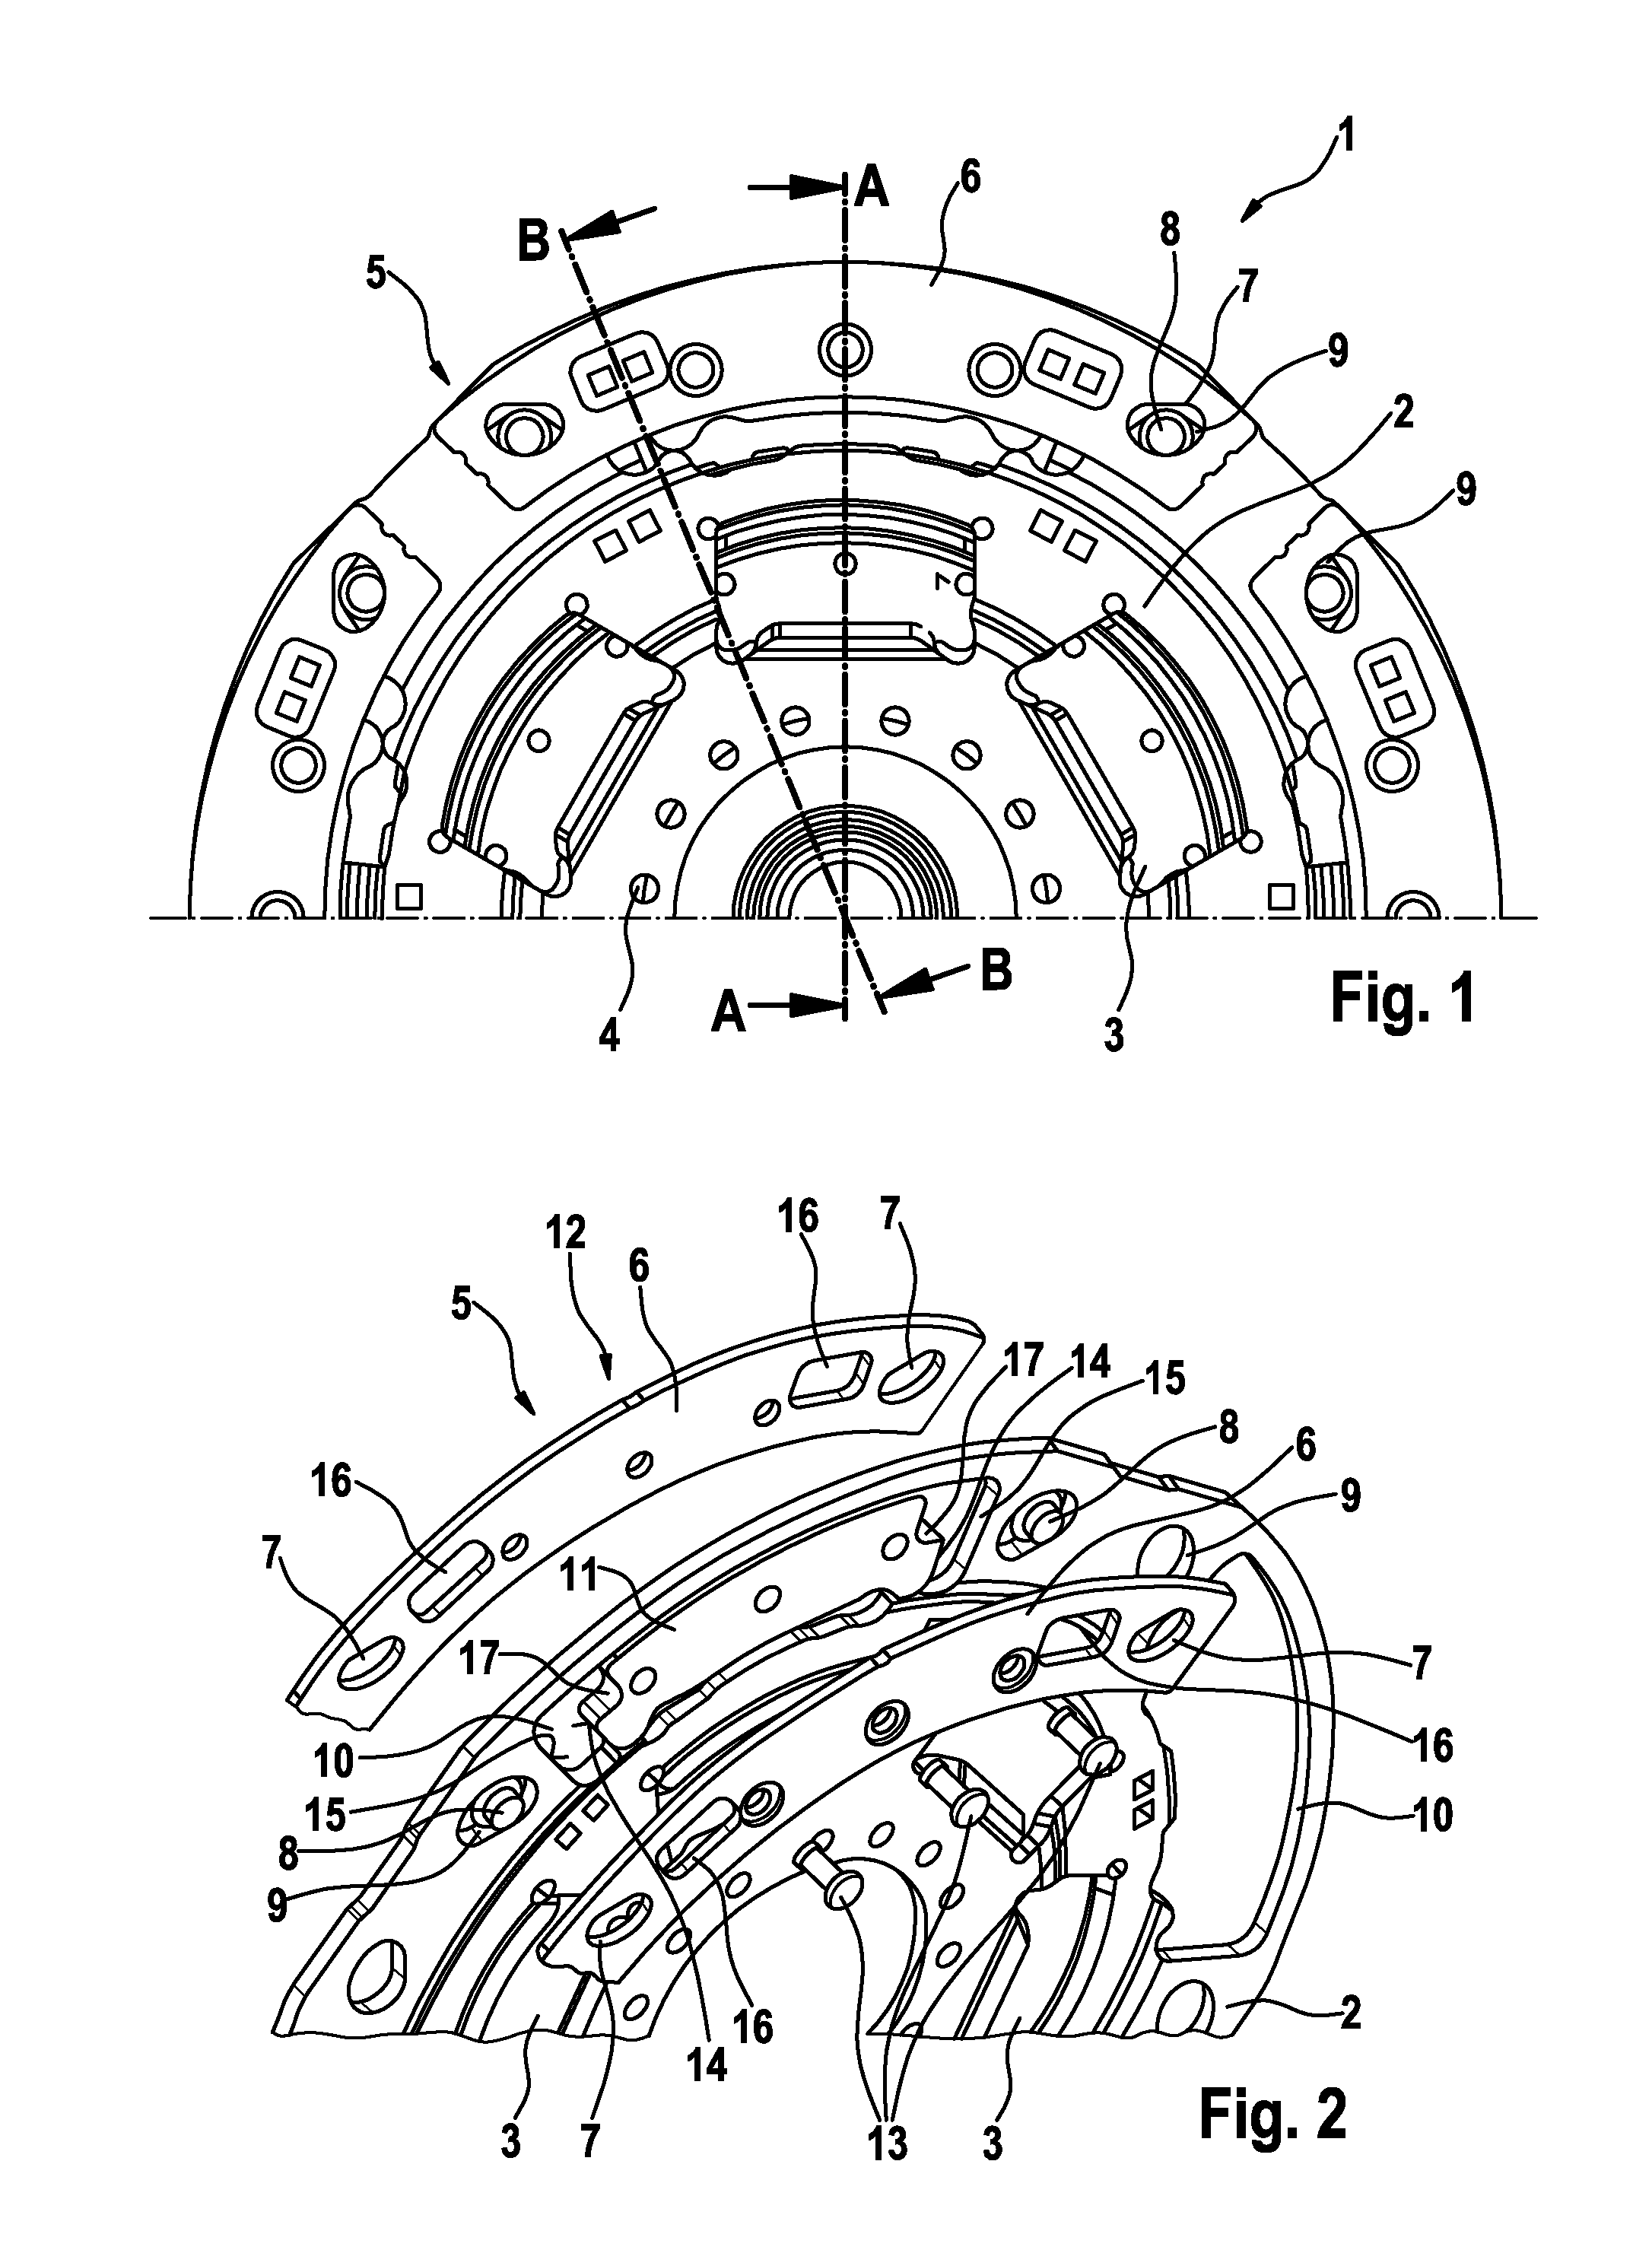 Rotary vibration damper with centrifugal force pendulum